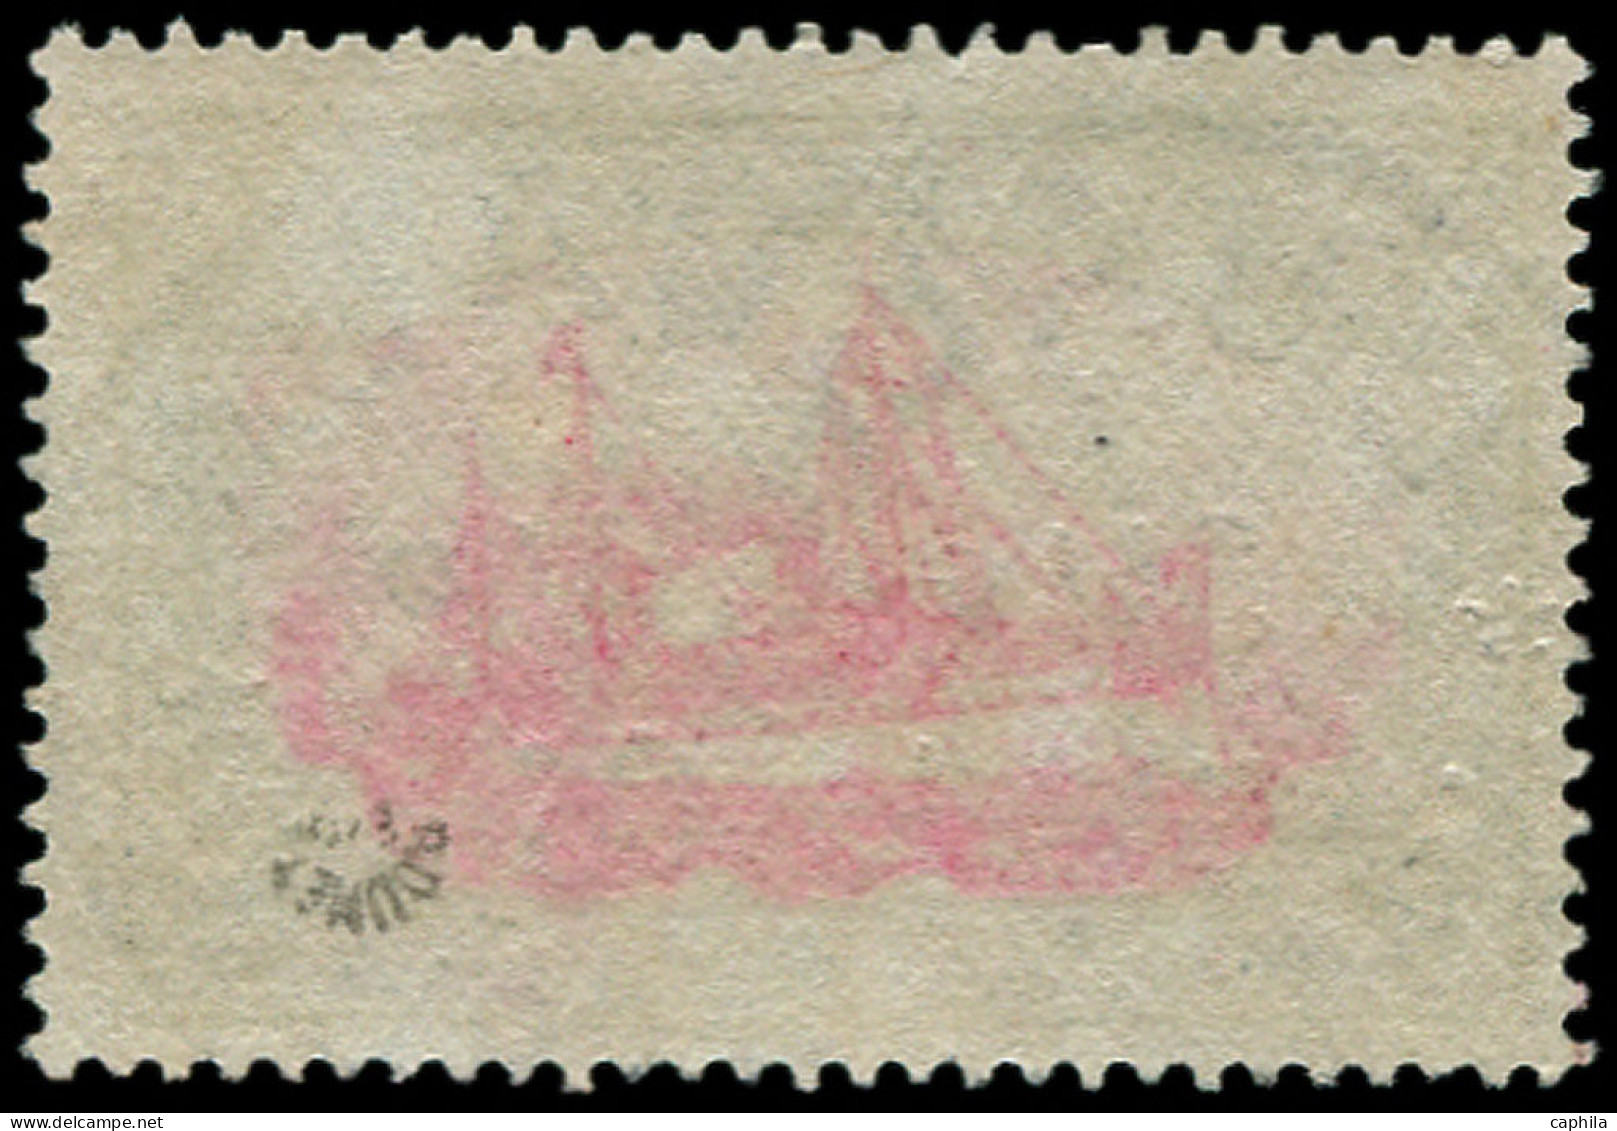 O CAMEROUN - Poste - 19, Oblitération "Douala" 3/08/06, Signé Roumet - Used Stamps